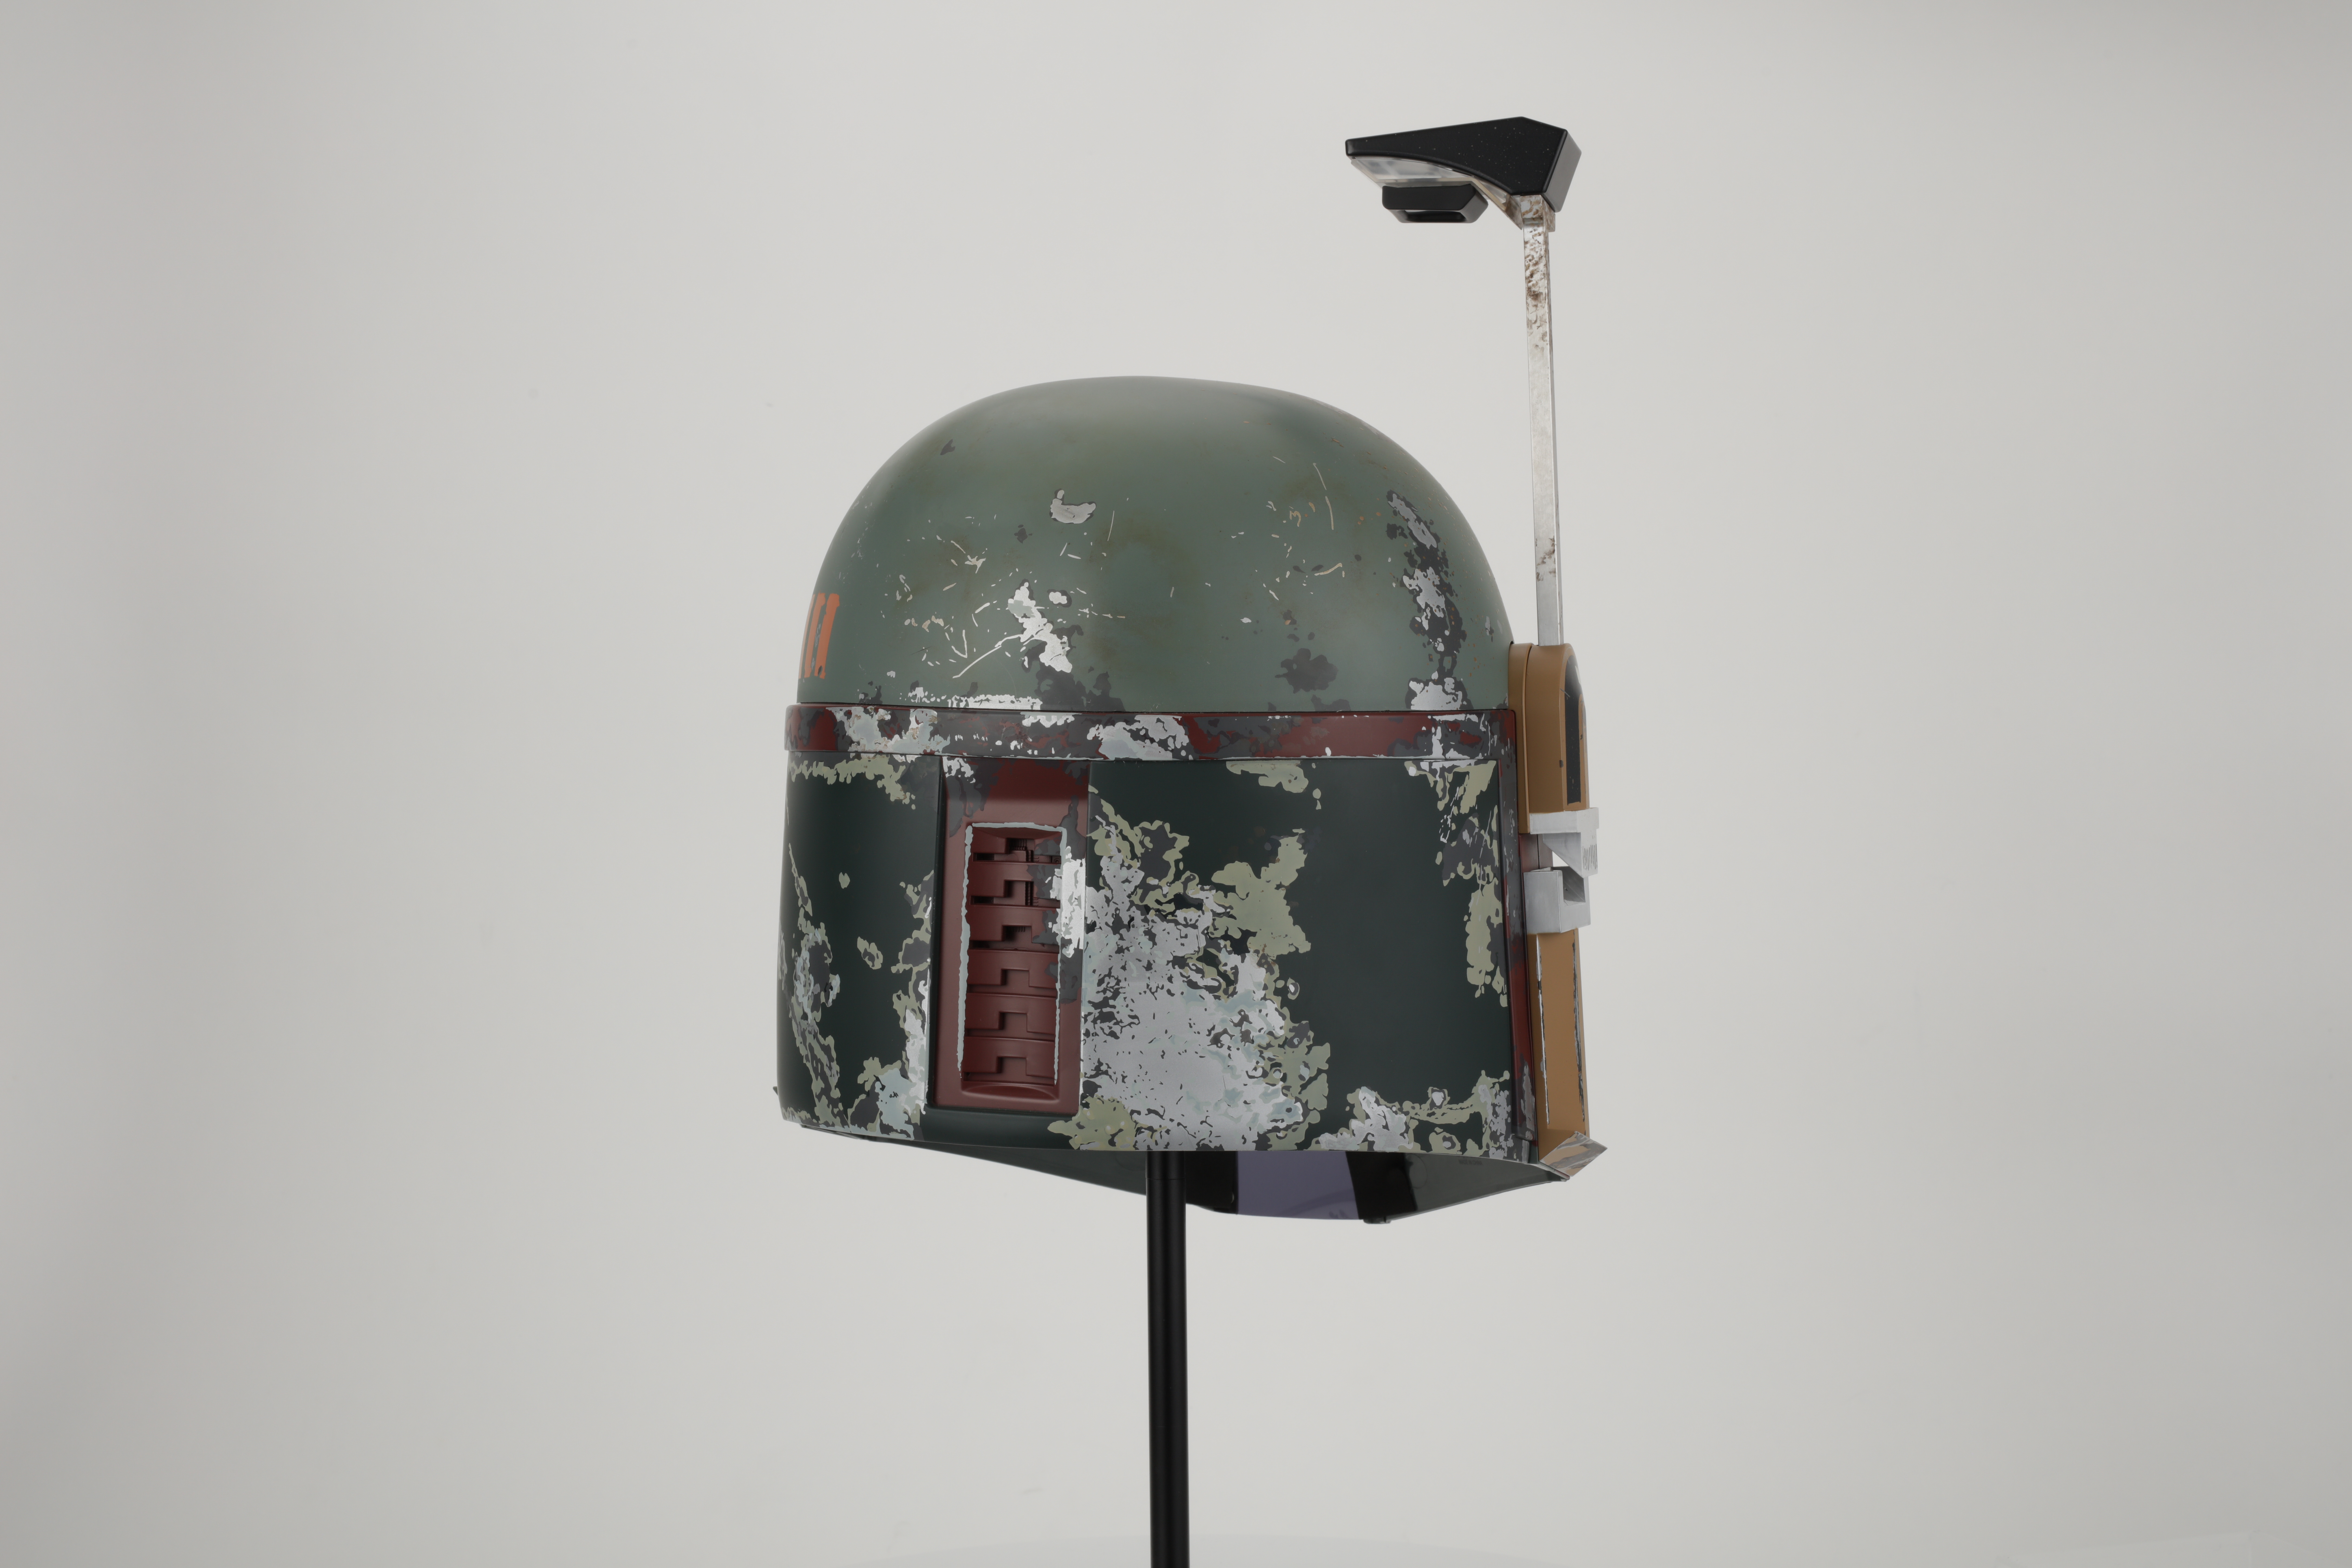 EFX Collectibles - Boba Fett Precision Crafted Replica Helmet 08.jpg